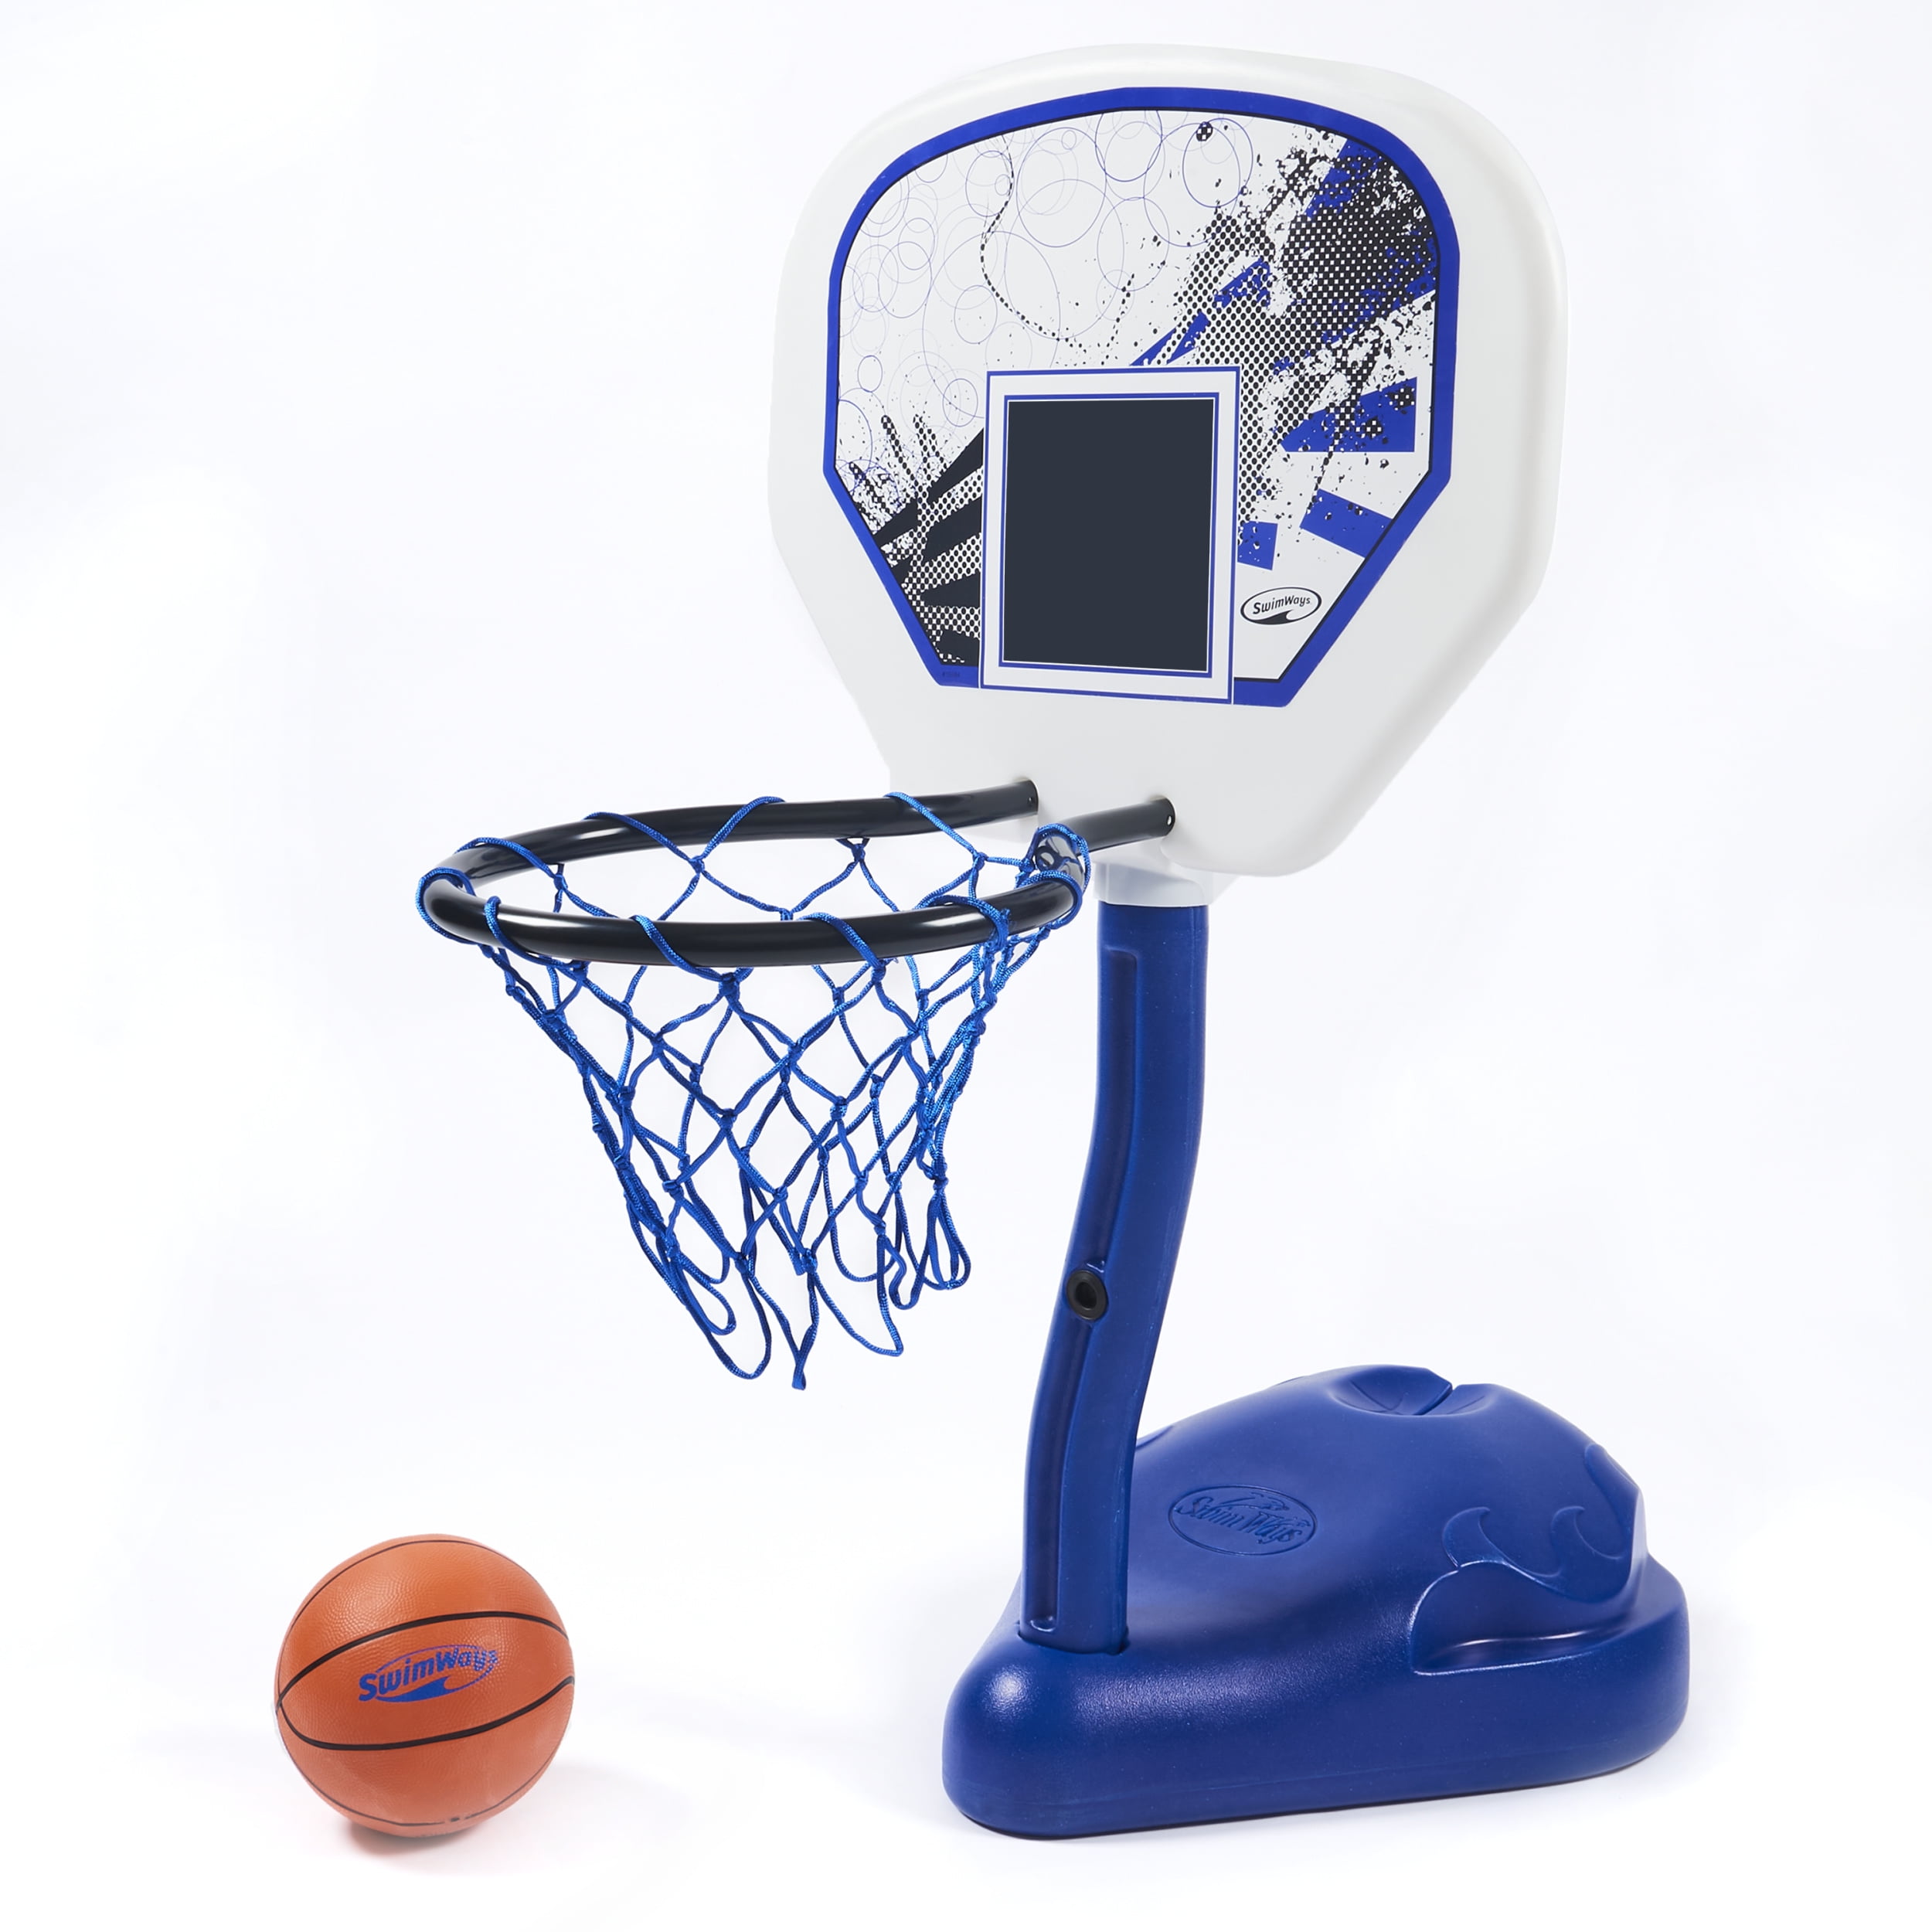 Dunn-rite PoolSport Portable Pool Basketball Hoop B950 for sale online 